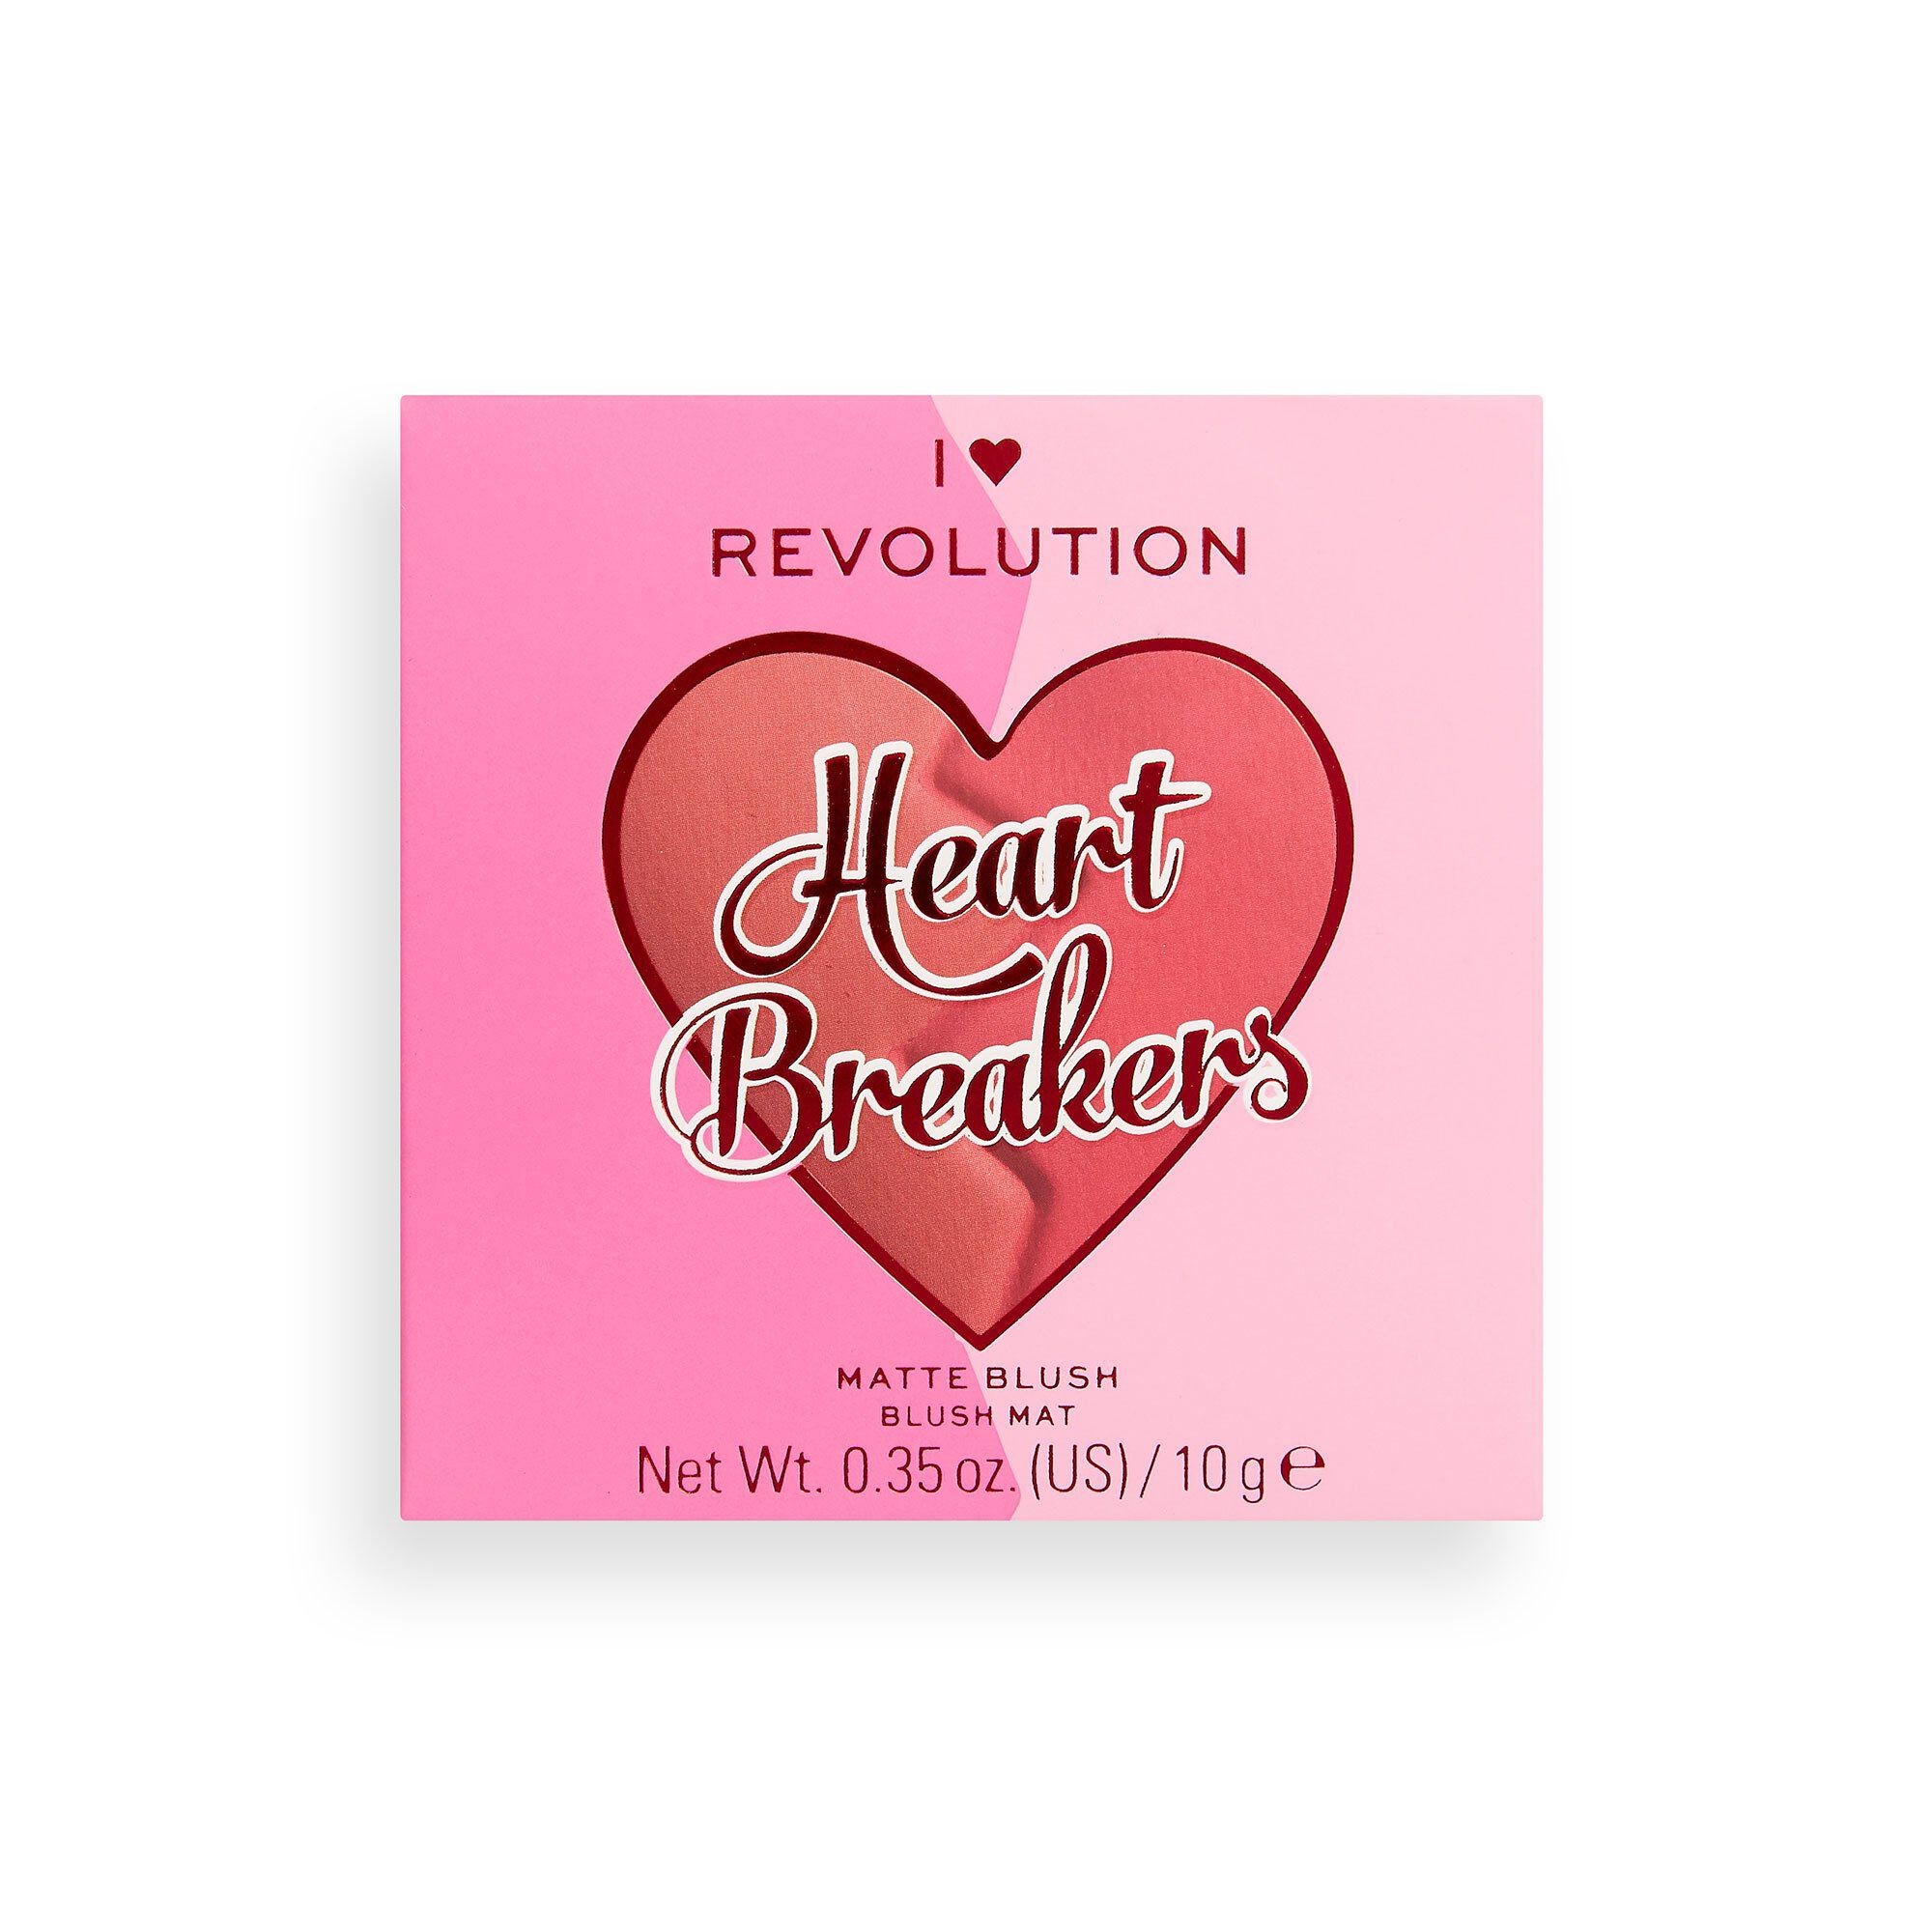 Rouge - Heartbreakers Blush